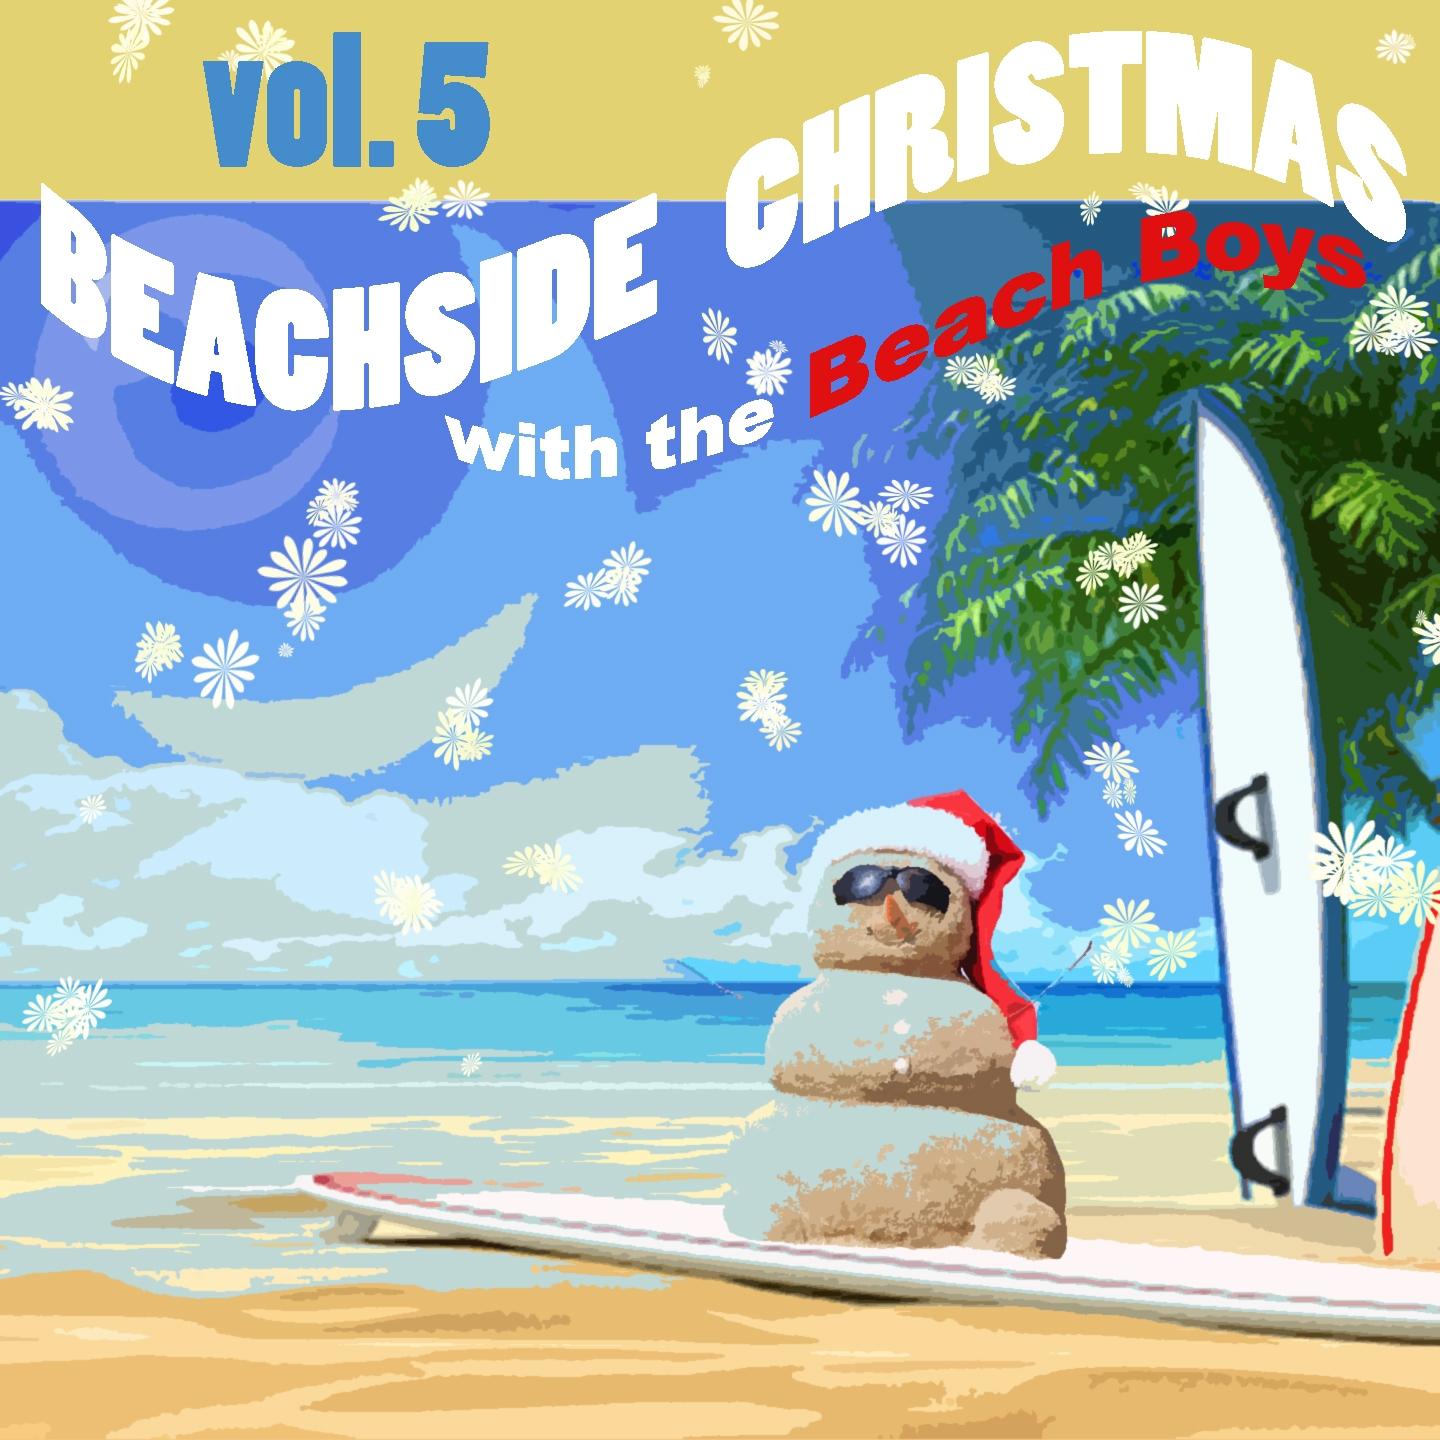 Beachside Christmas, Vol. 5 (Aloha Santa)